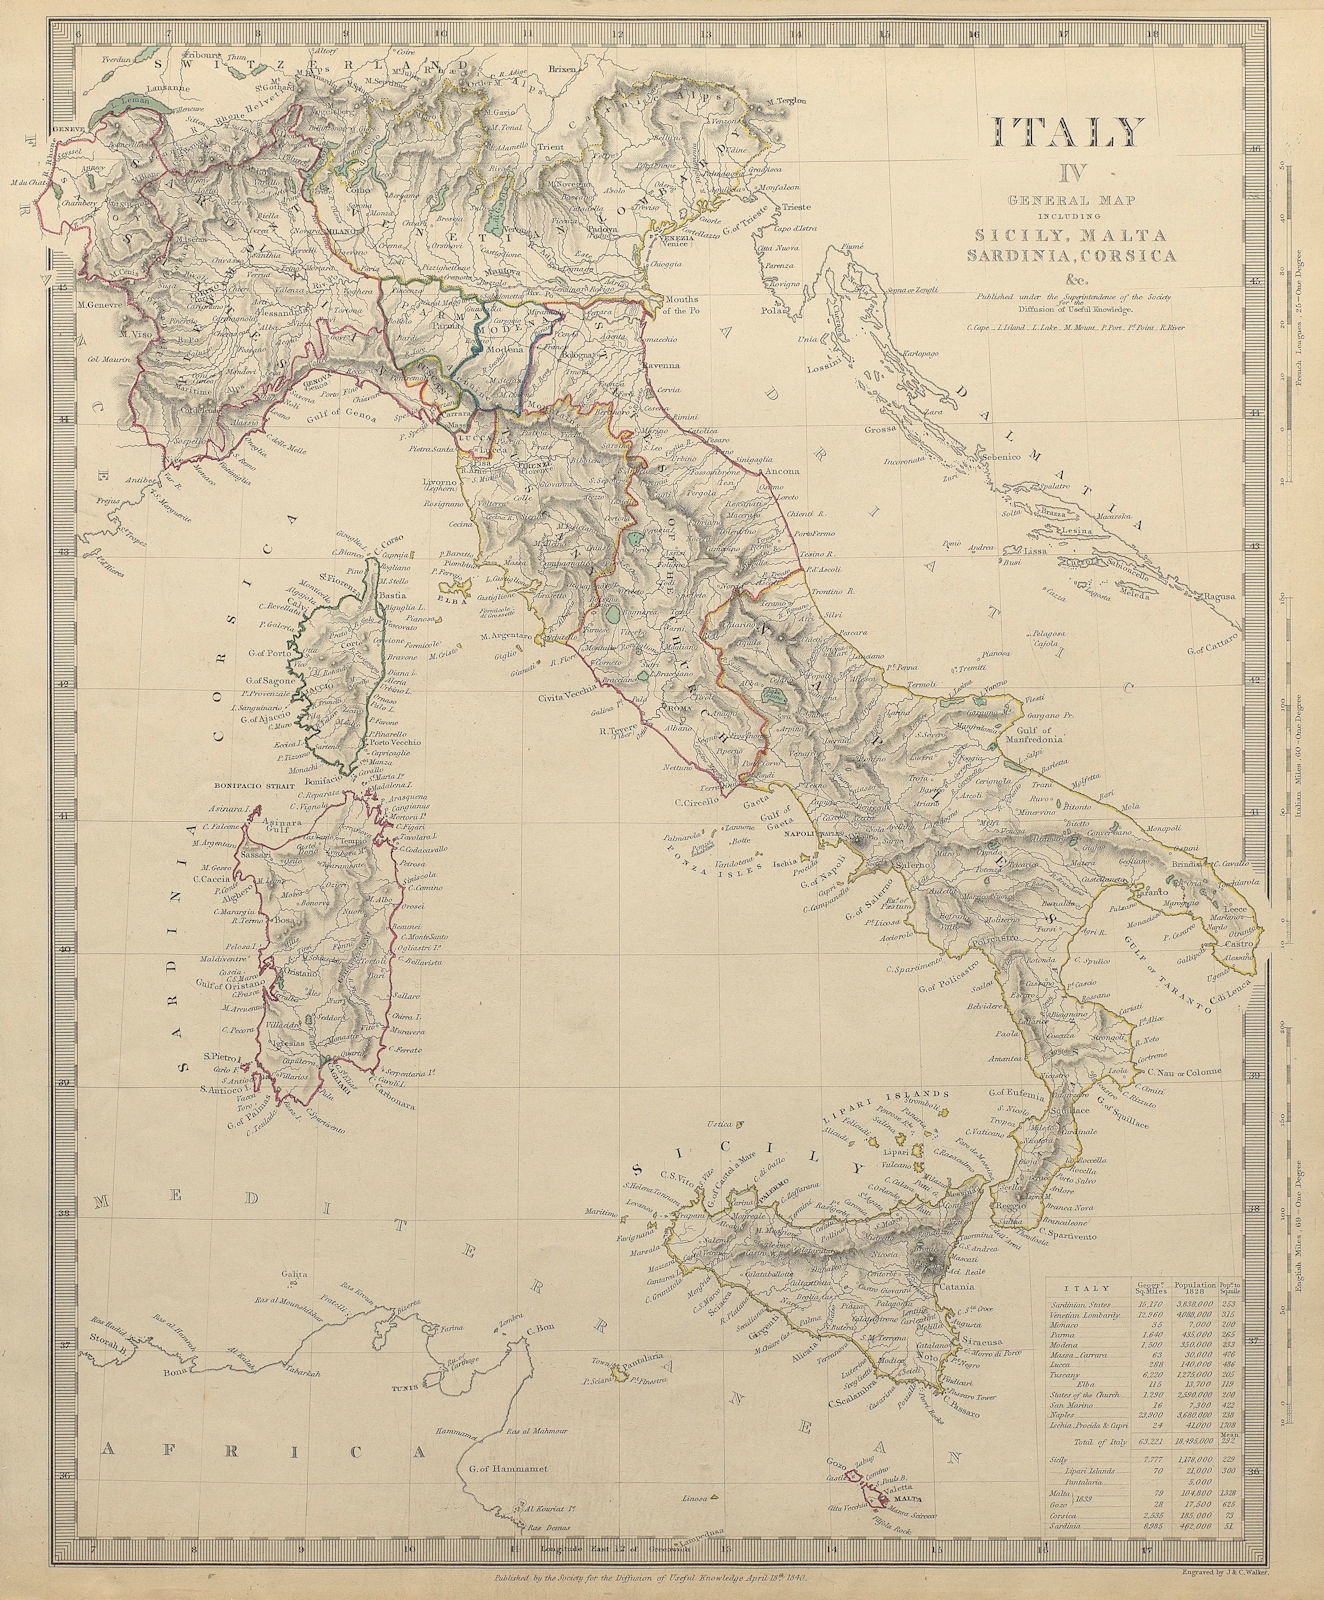 ITALY General Map Sicily Sardinia Corsica Malta. Population table SDUK 1844